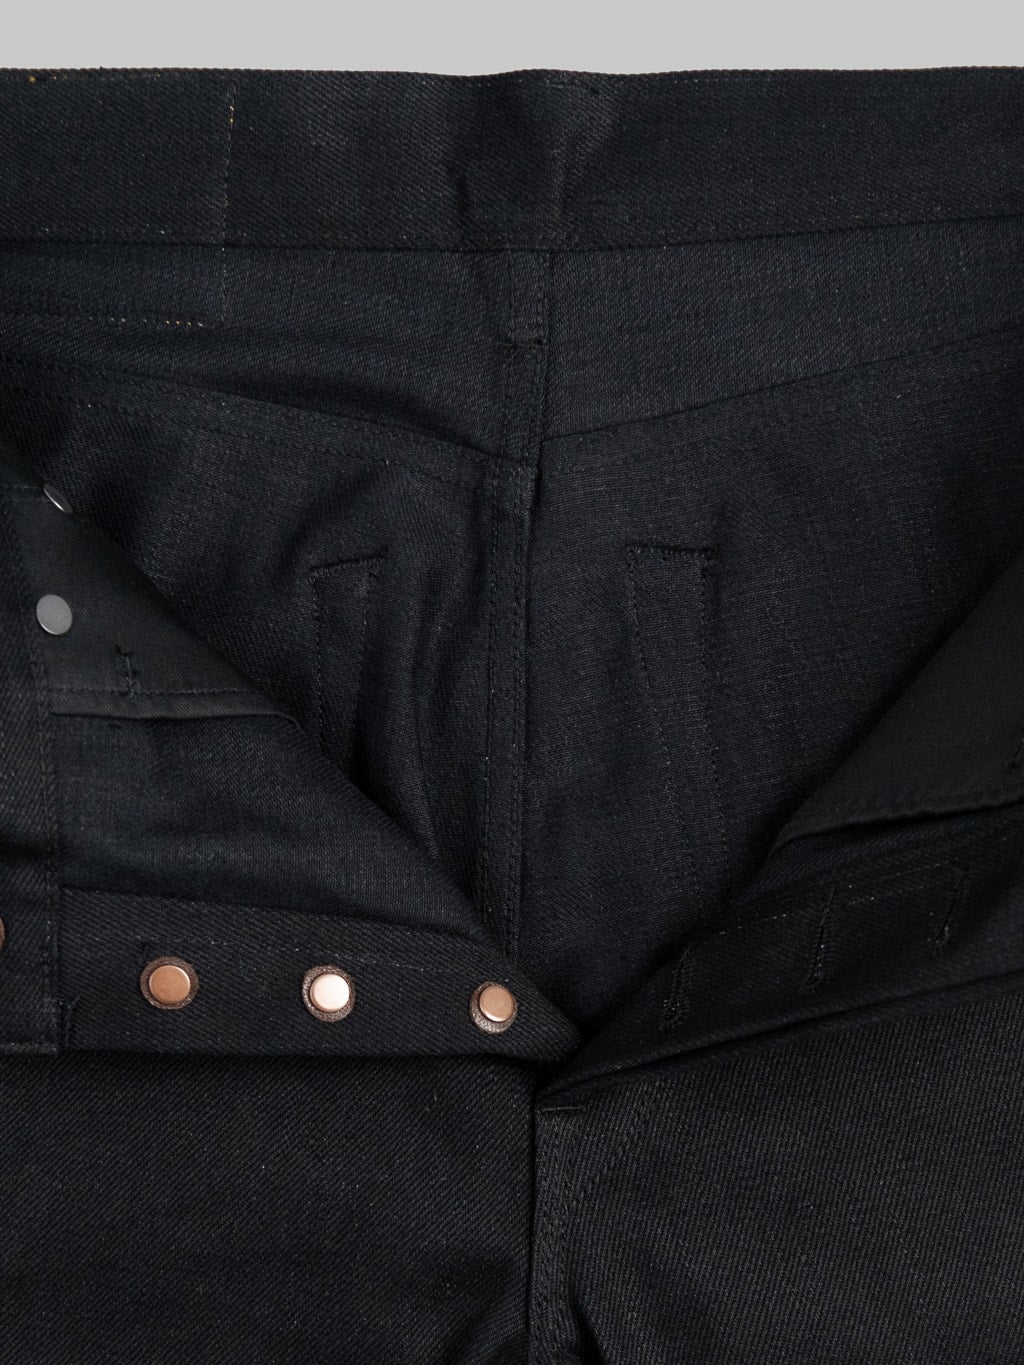 Stevenson Overall Big Sur 210 12oz Slim Tapered jeans solid black interior